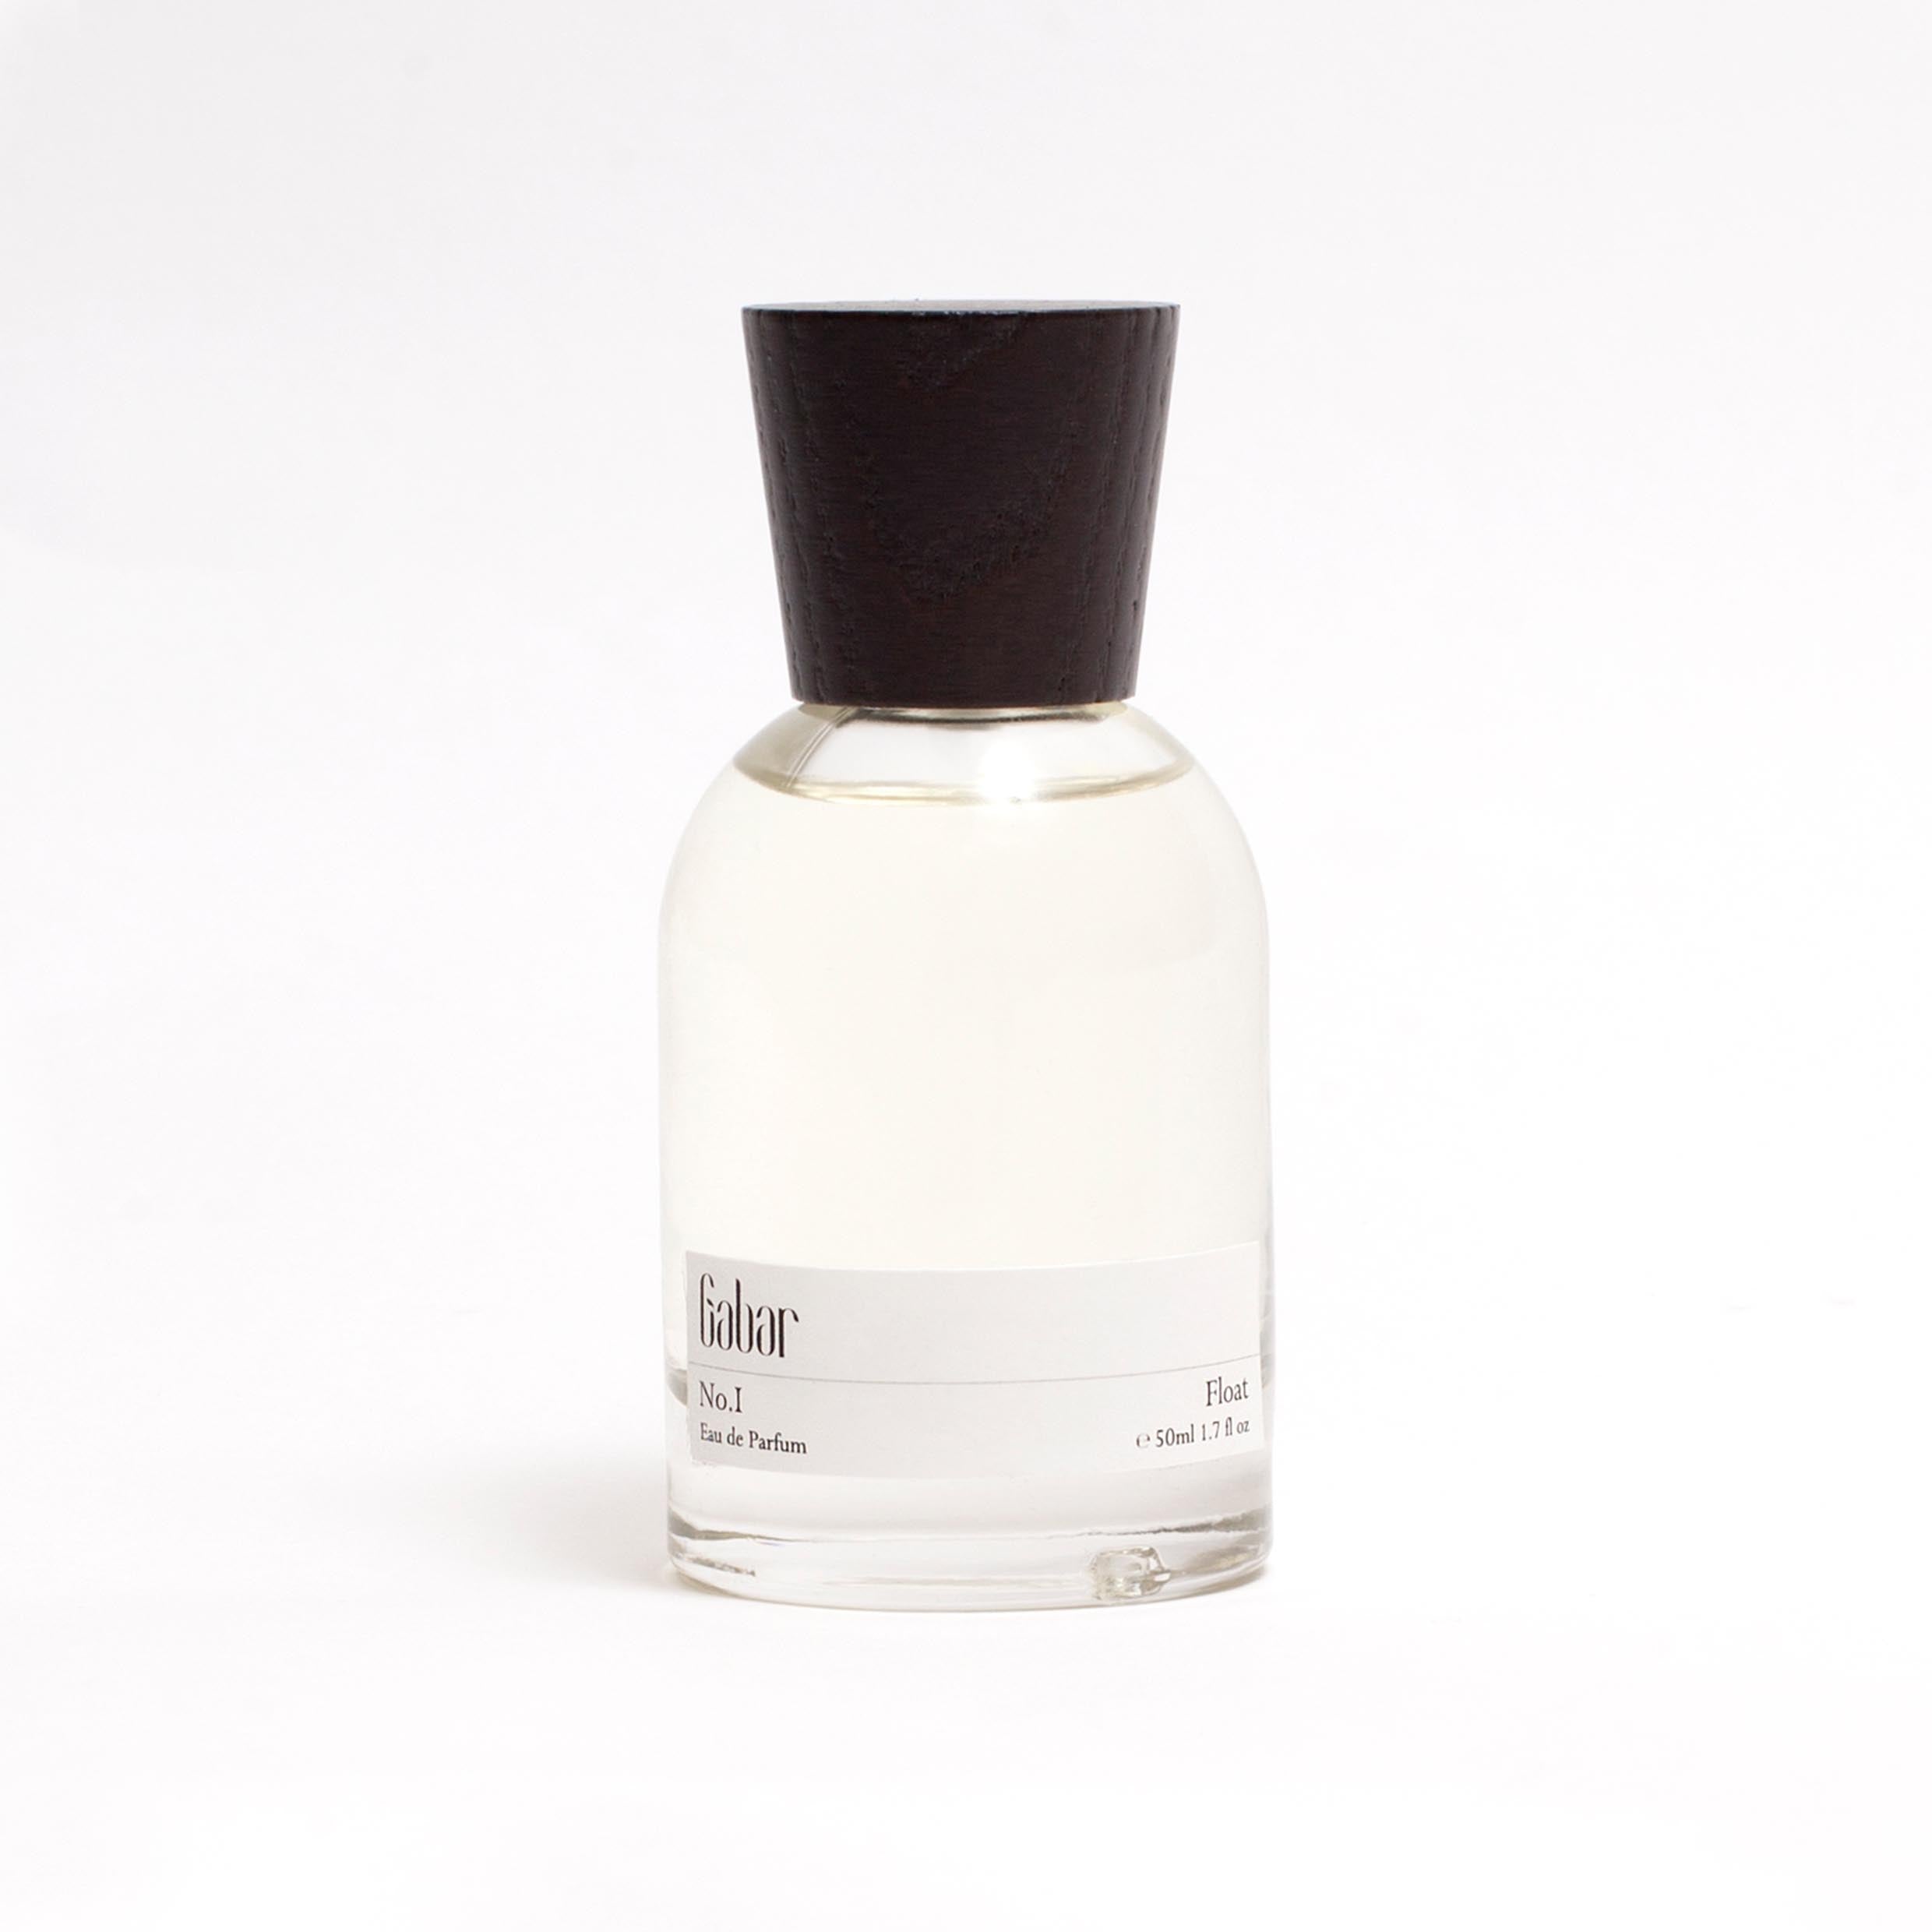 No.1 Float 50ml Eau de Parfum Bottle by Gabar